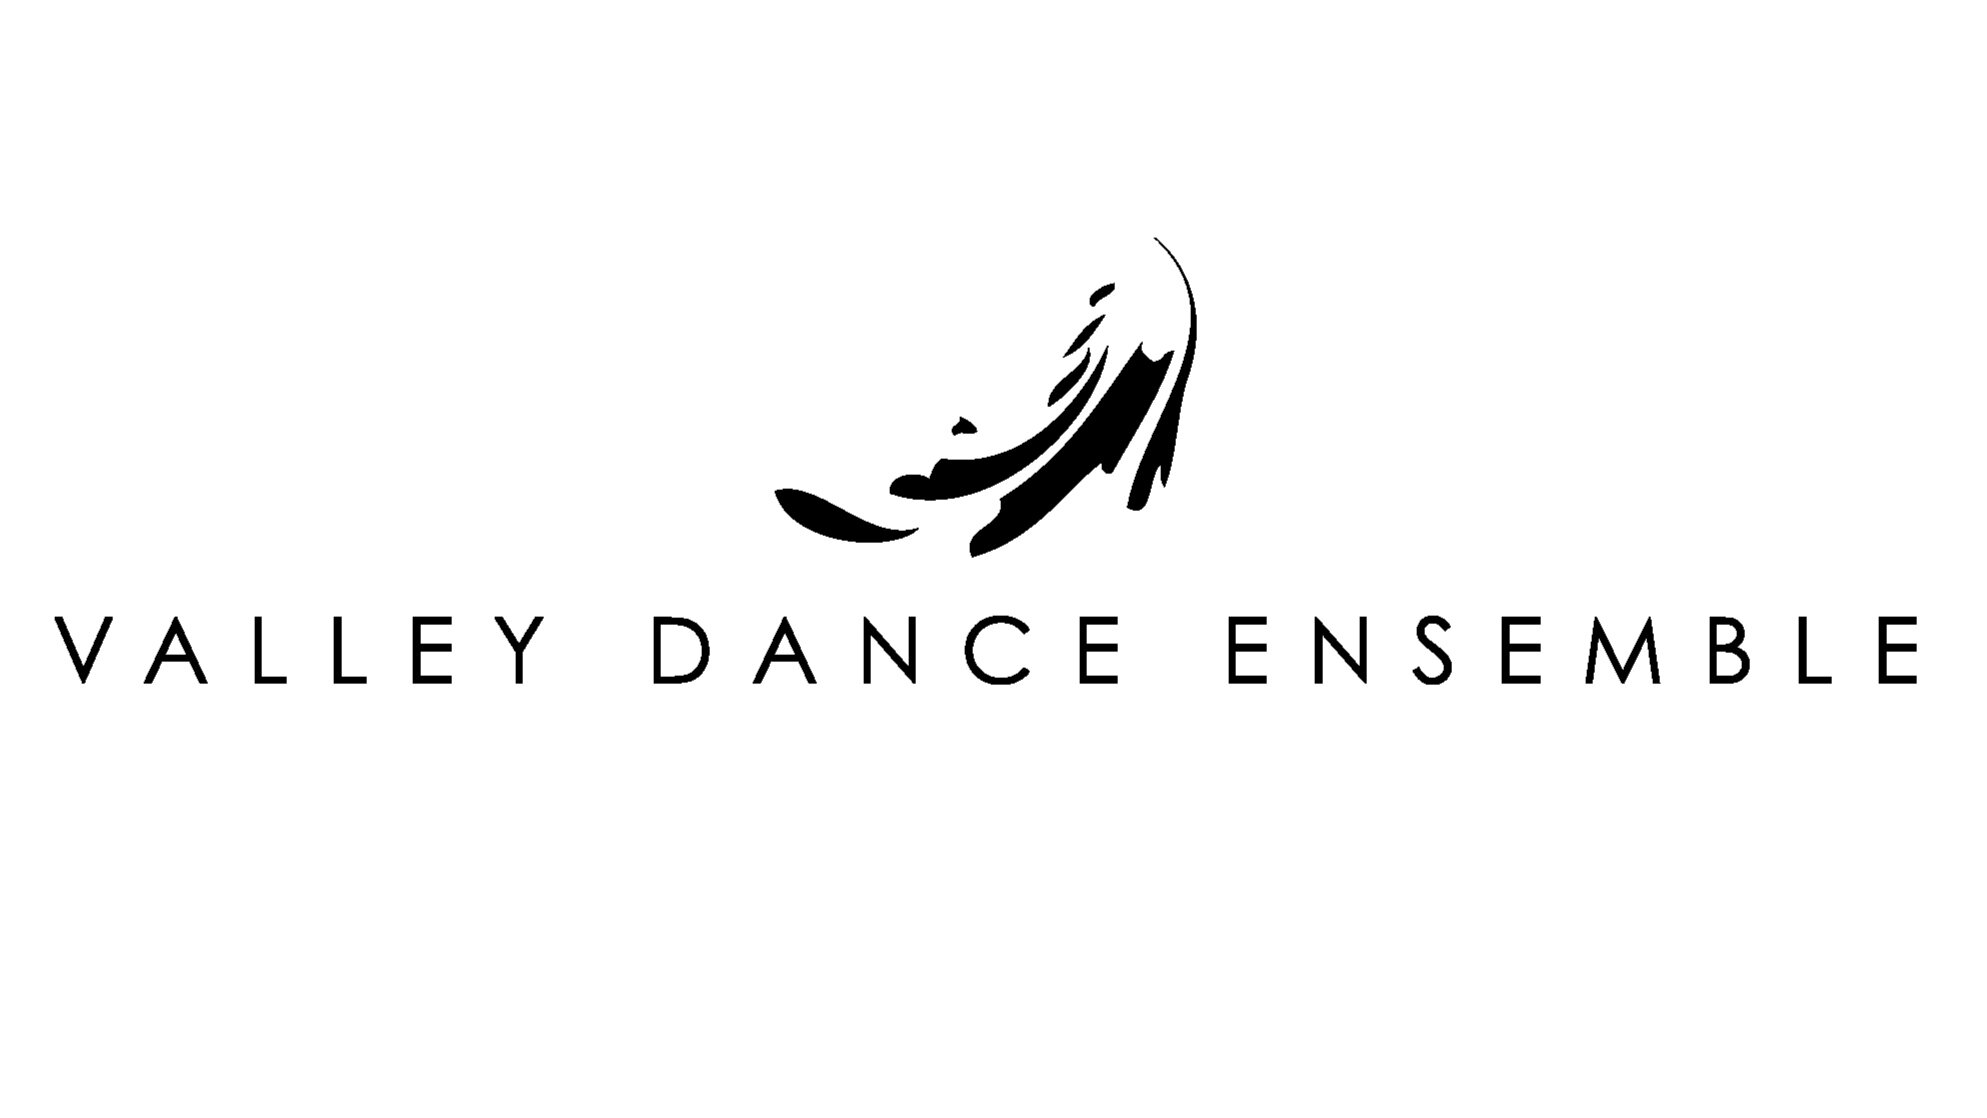 VALLEY DANCE ENSEMBLE